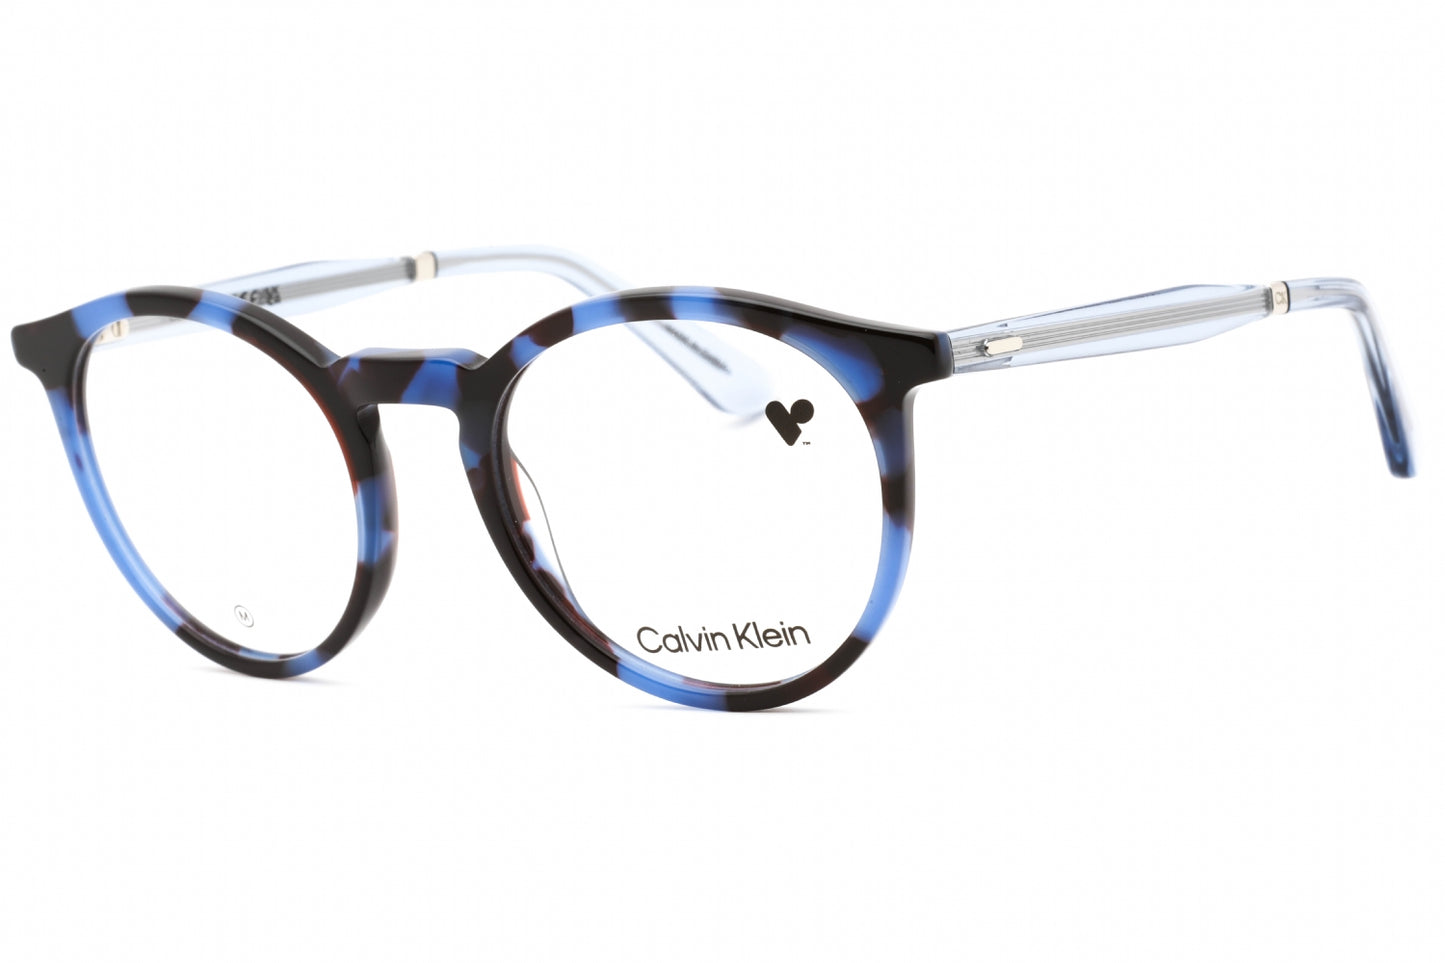 Calvin Klein CK23515-460 50mm New Eyeglasses